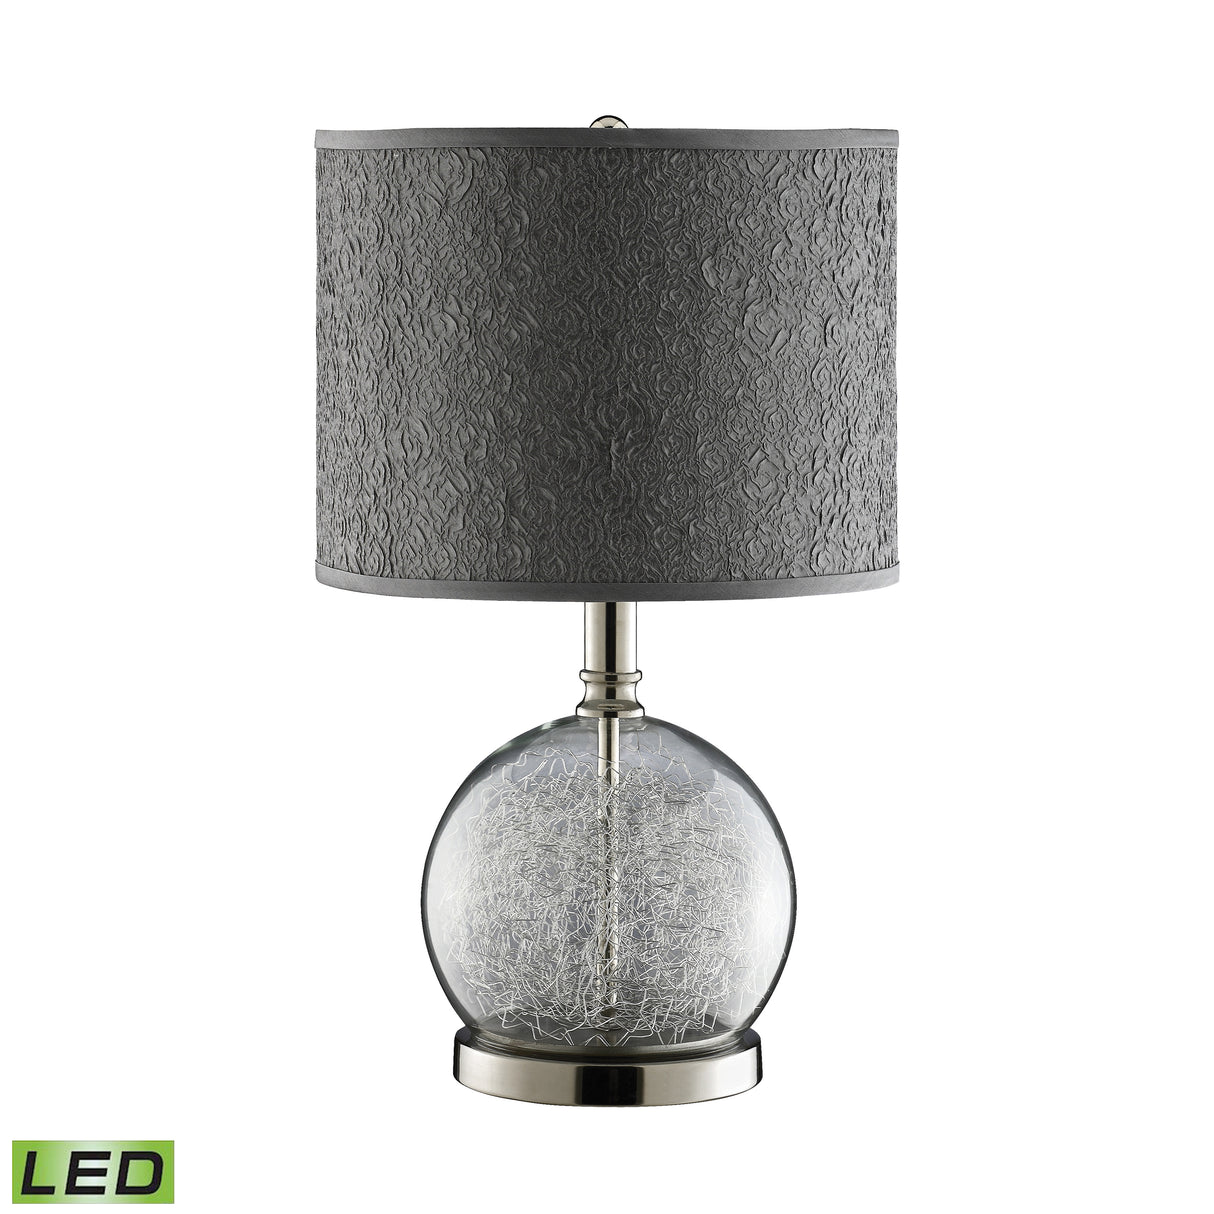 Elk 94732-LED Filament 22'' High 1-Light Table Lamp - Chrome - Includes LED Bulb